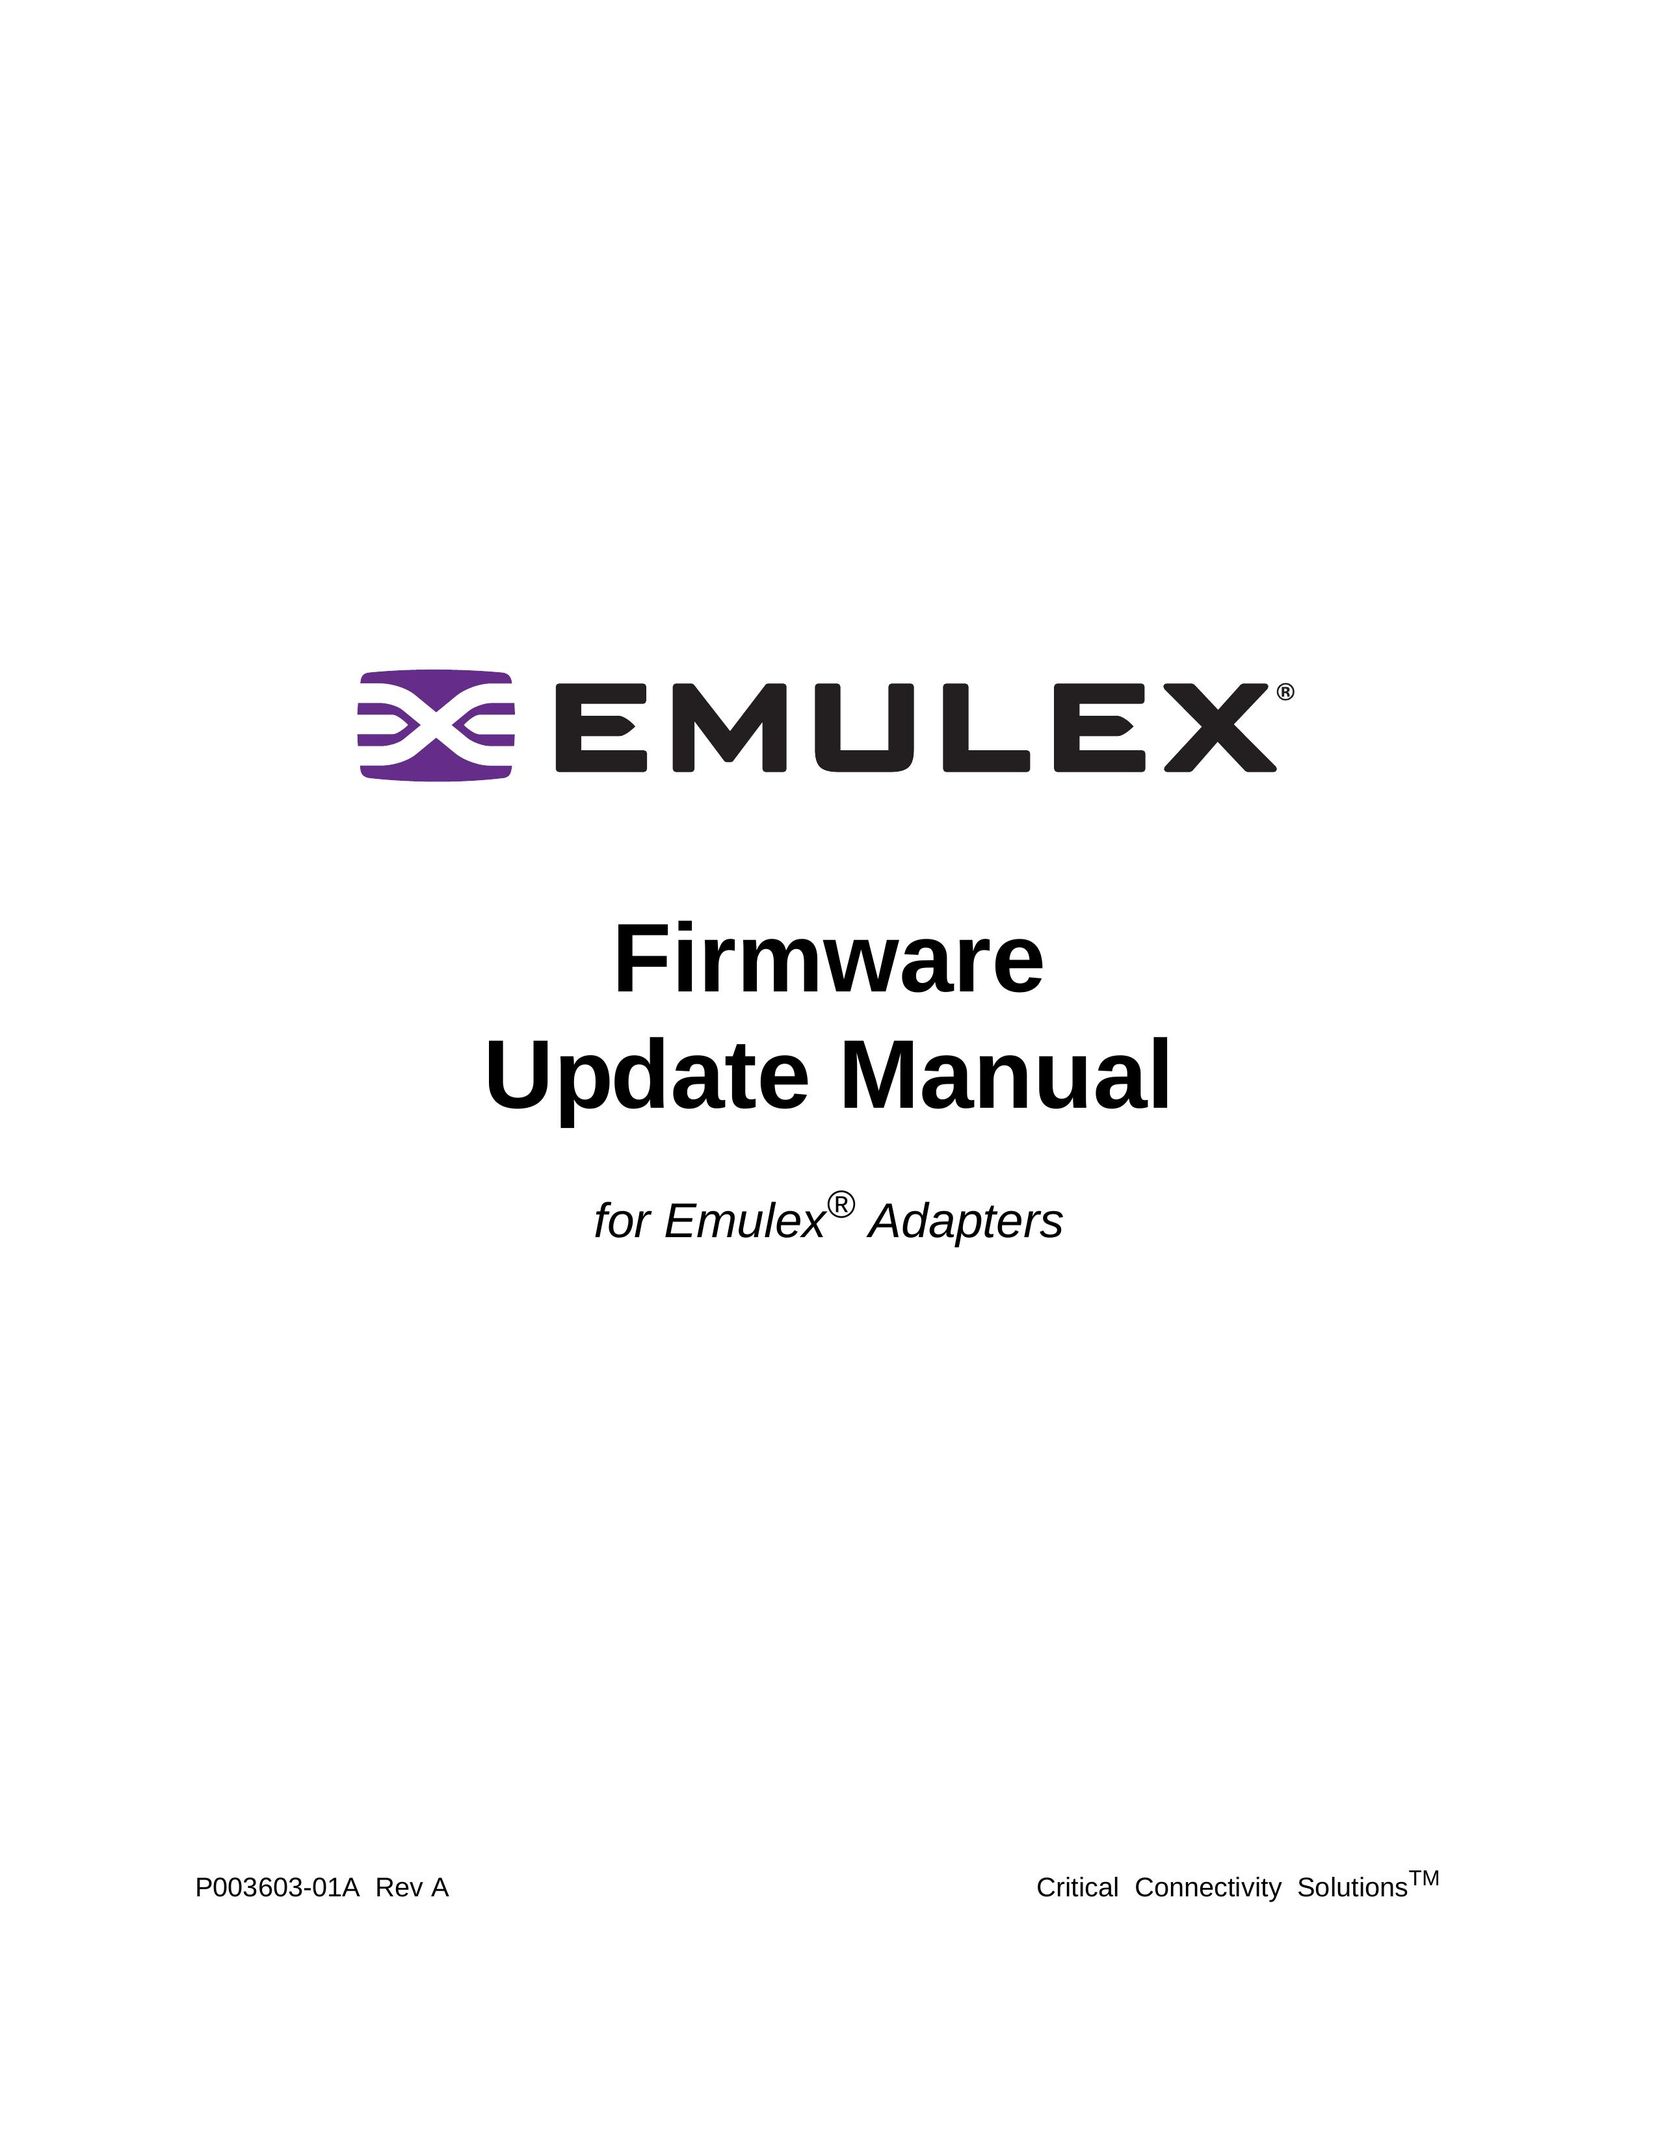 Emulex Firmware Network Card User Manual